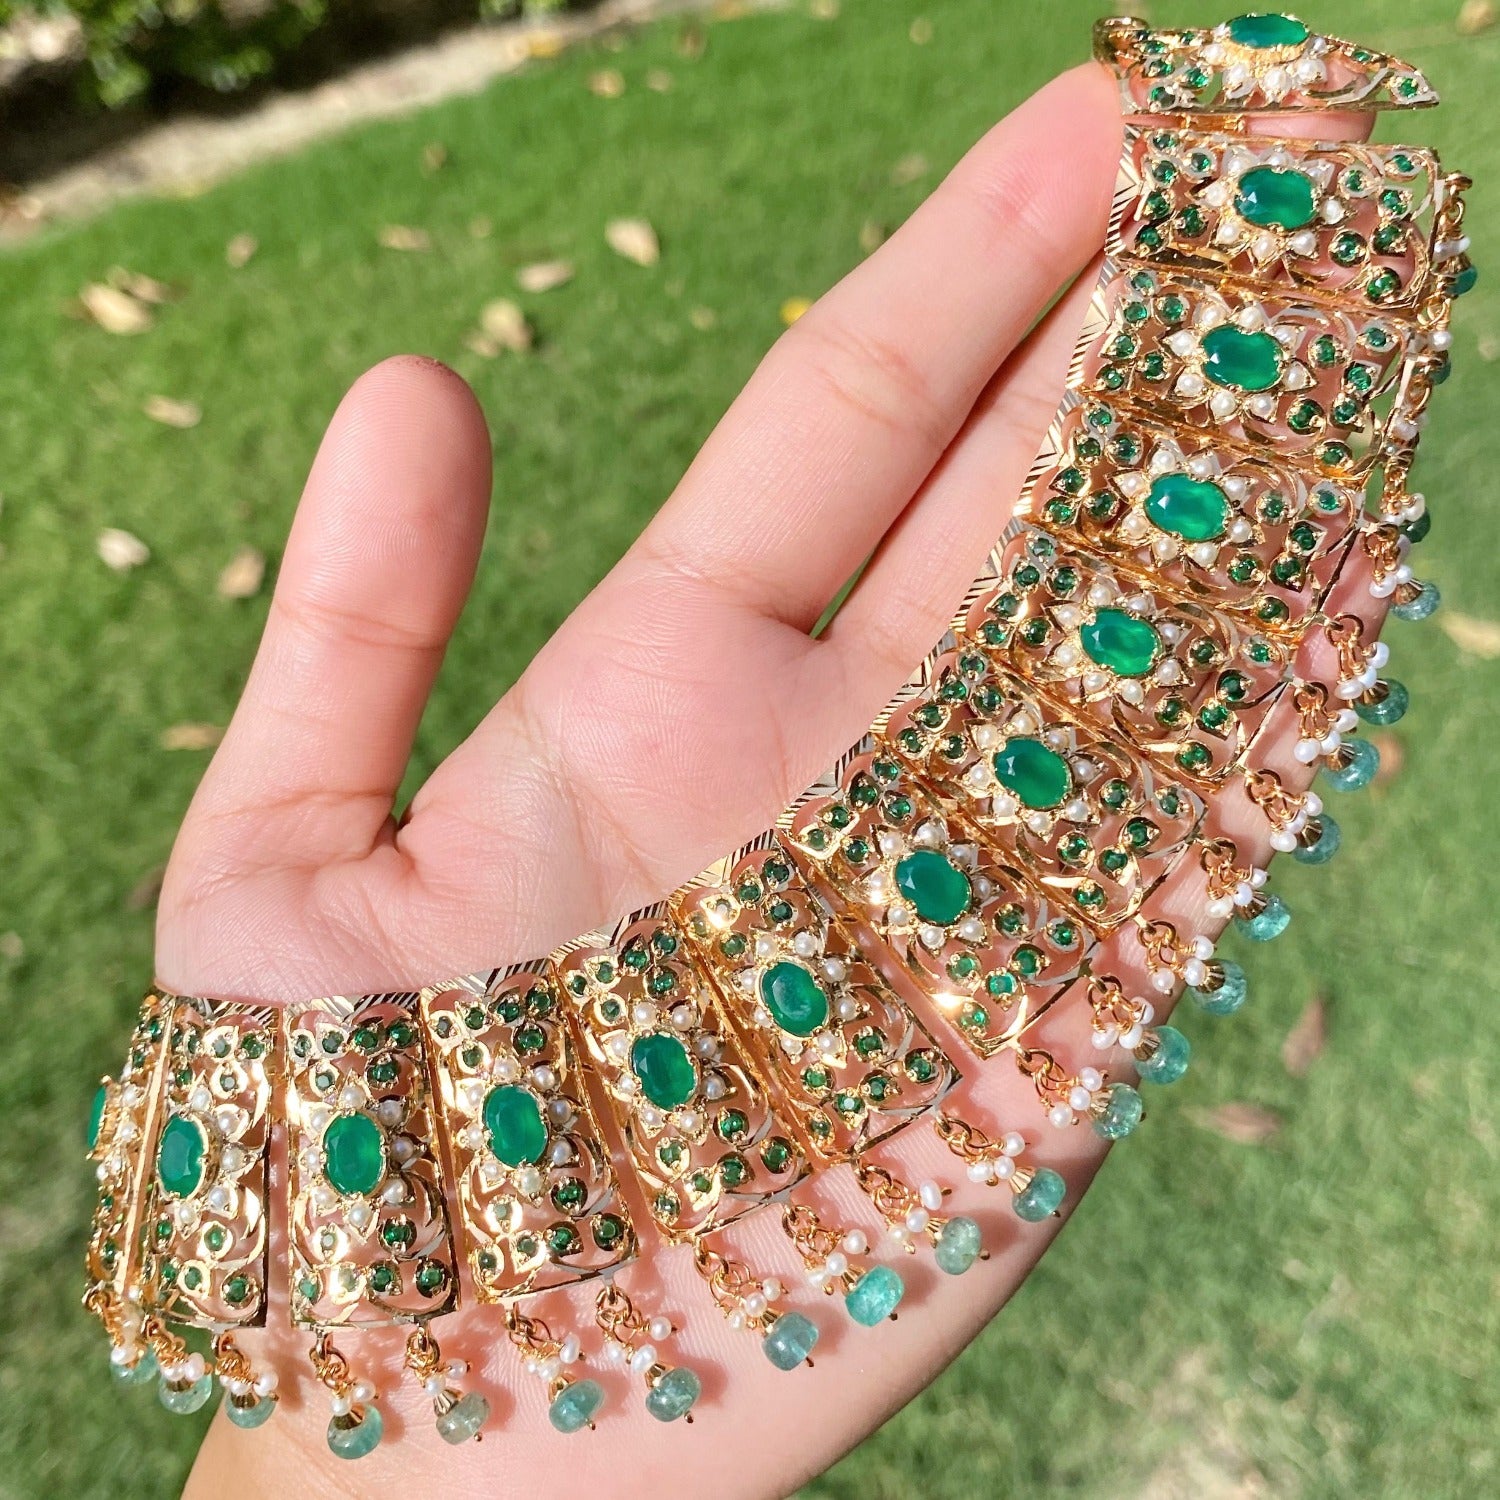 emerald necklace set